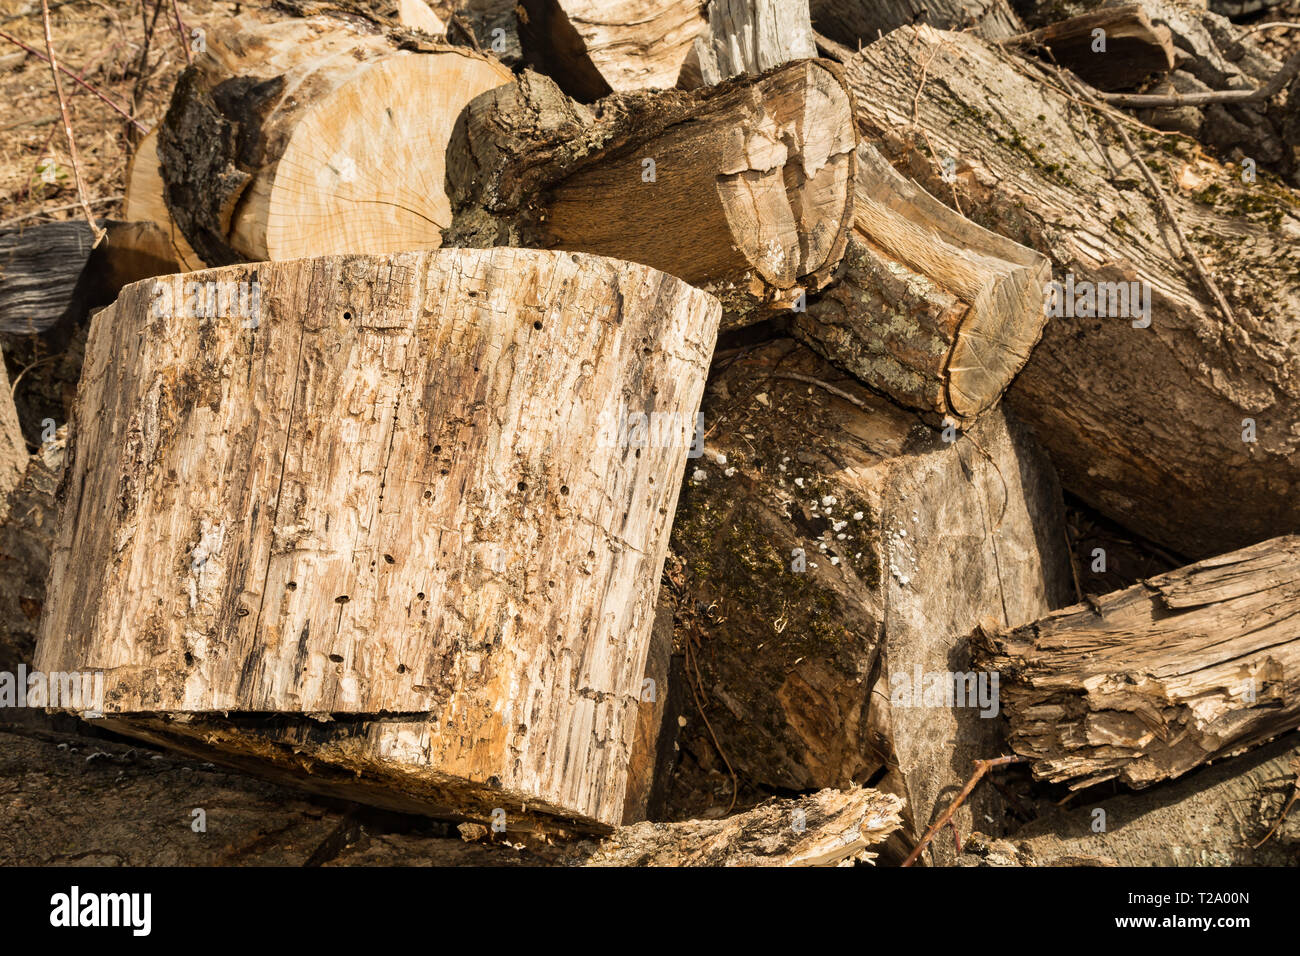 Brennholz geplagt mit Emerald Ash langweilig Käfer Stockfoto